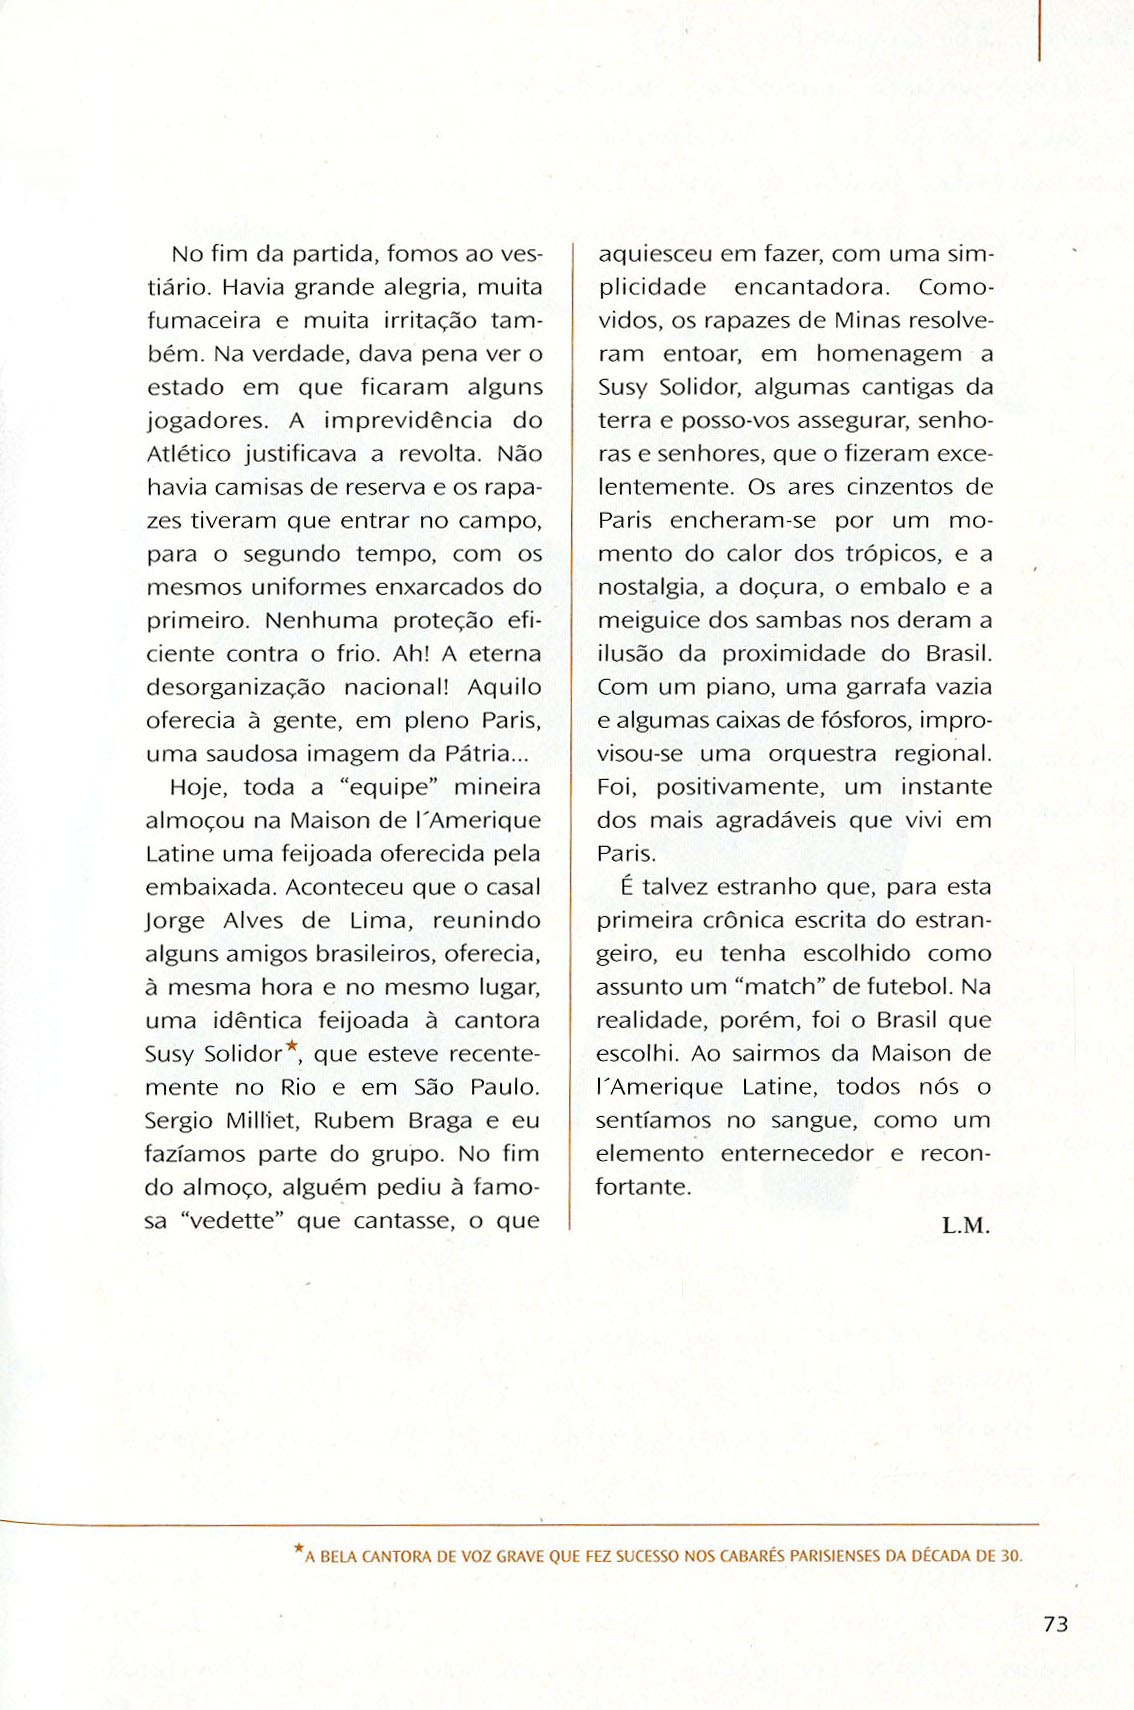 Crônica de Luís Martins publicada n’O Estado de S. Paulo de 24 de dezembro de 1952.